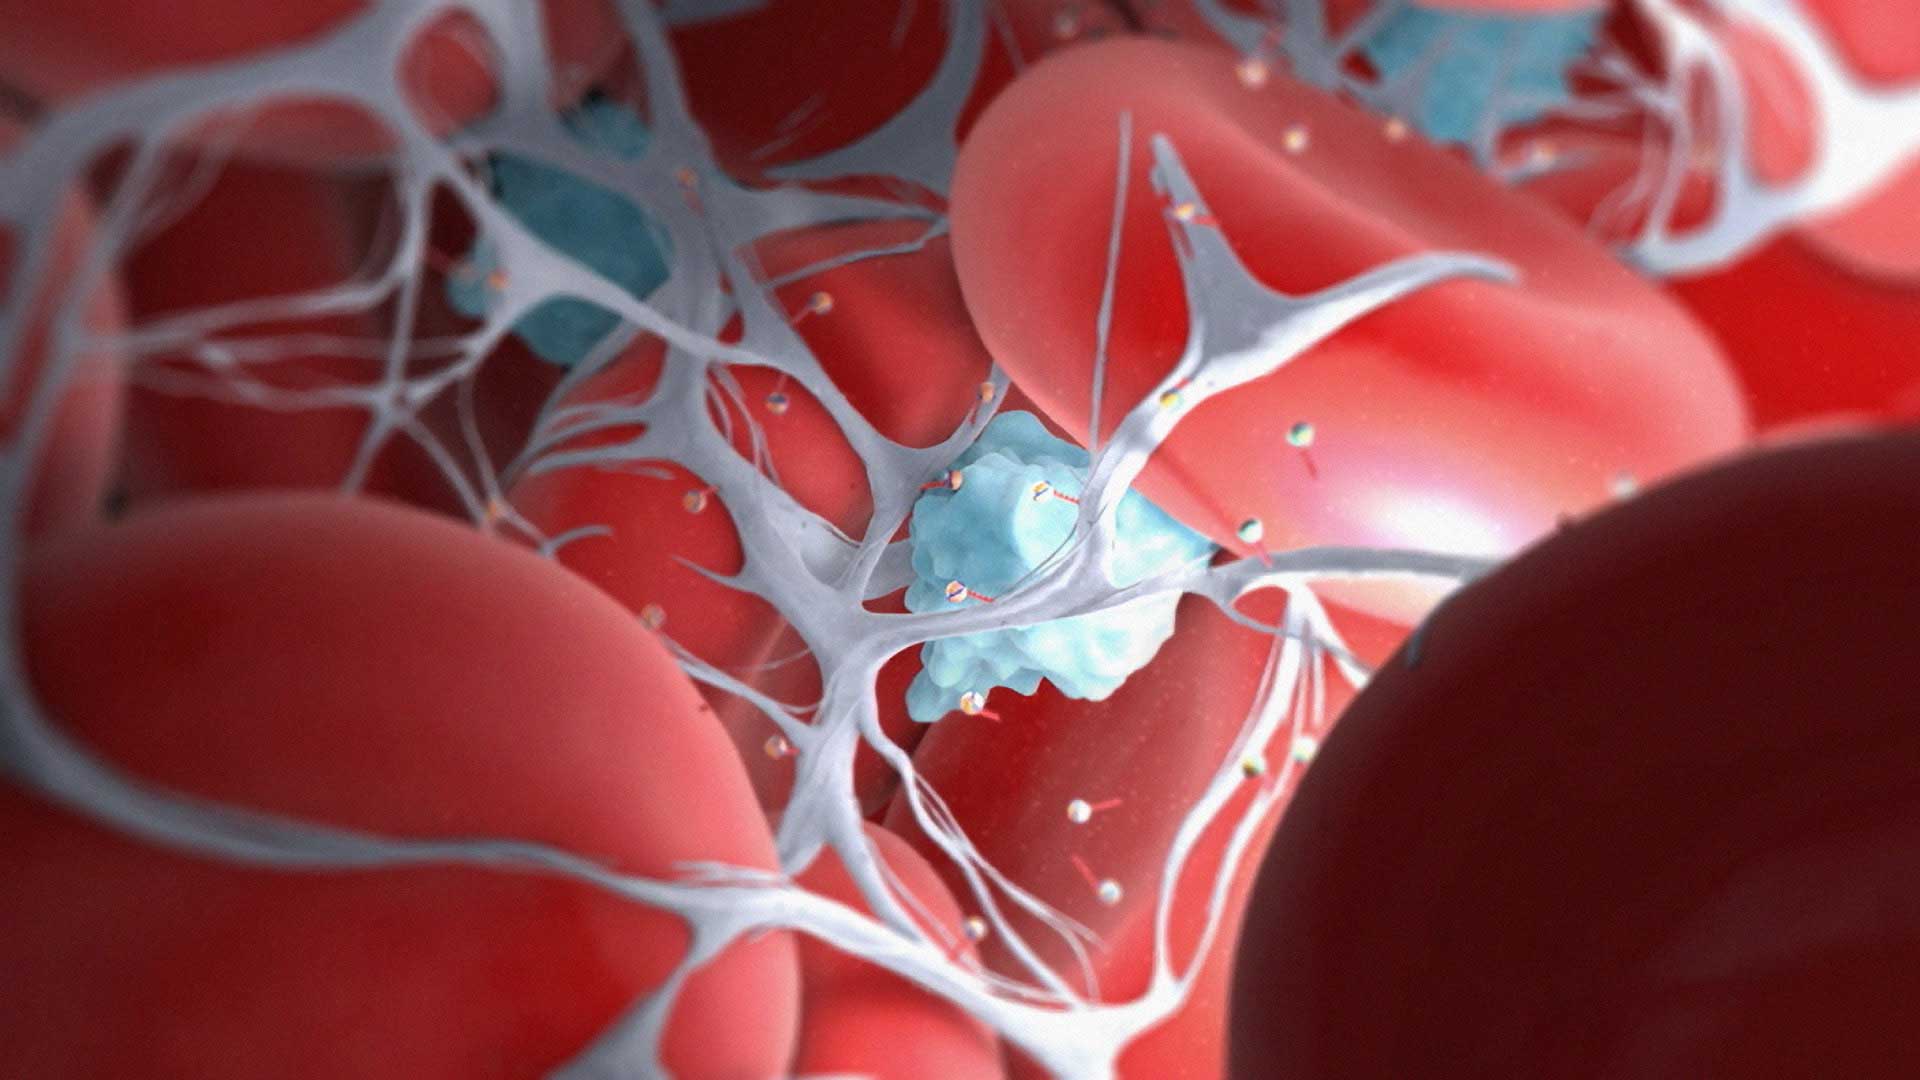 clot scene from pharmaceutical animation